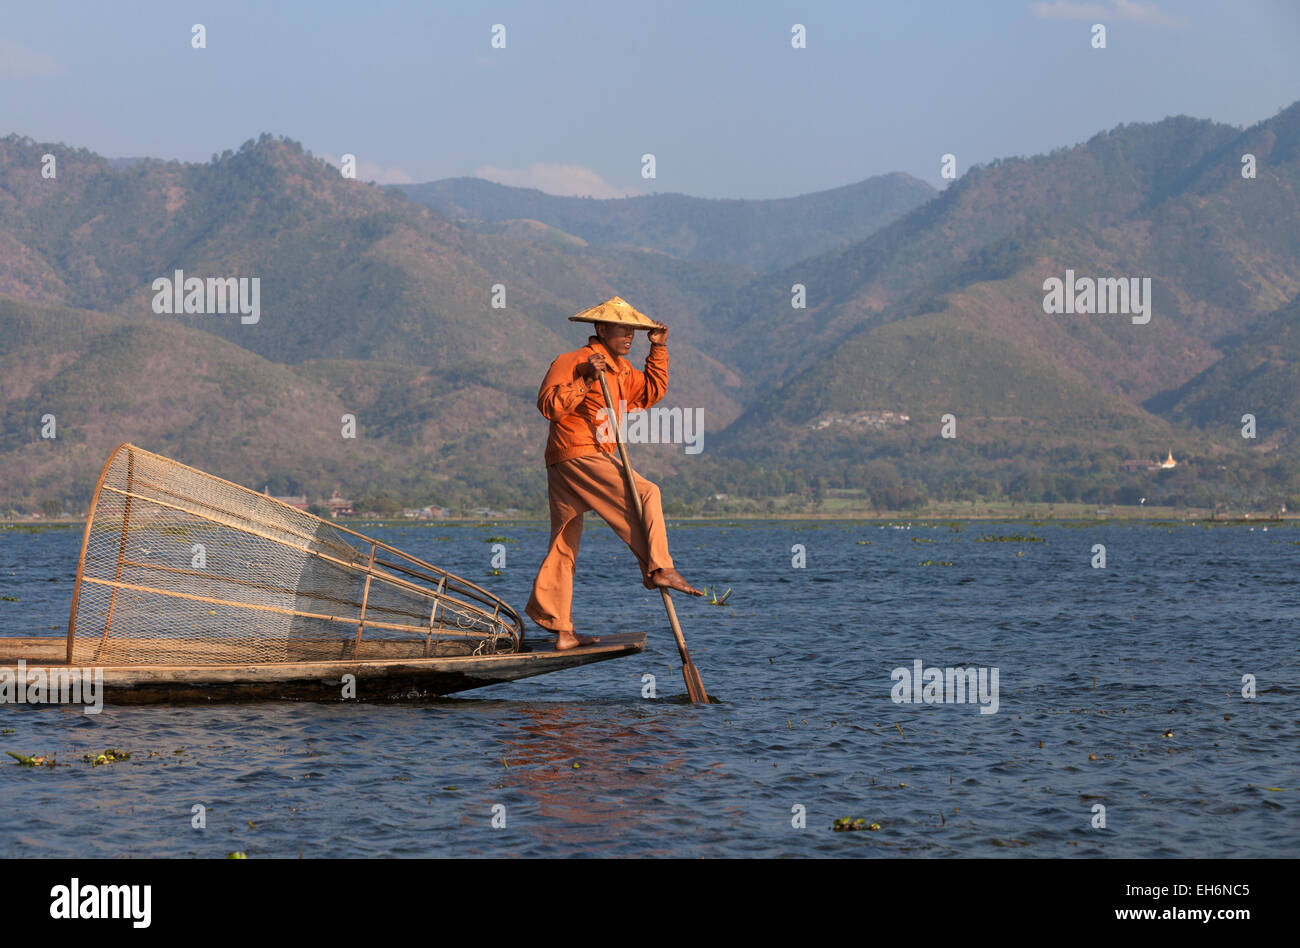 Inle See Bein Rudern Fischer angeln, Inle-See, Myanmar (Burma), Asien Stockfoto